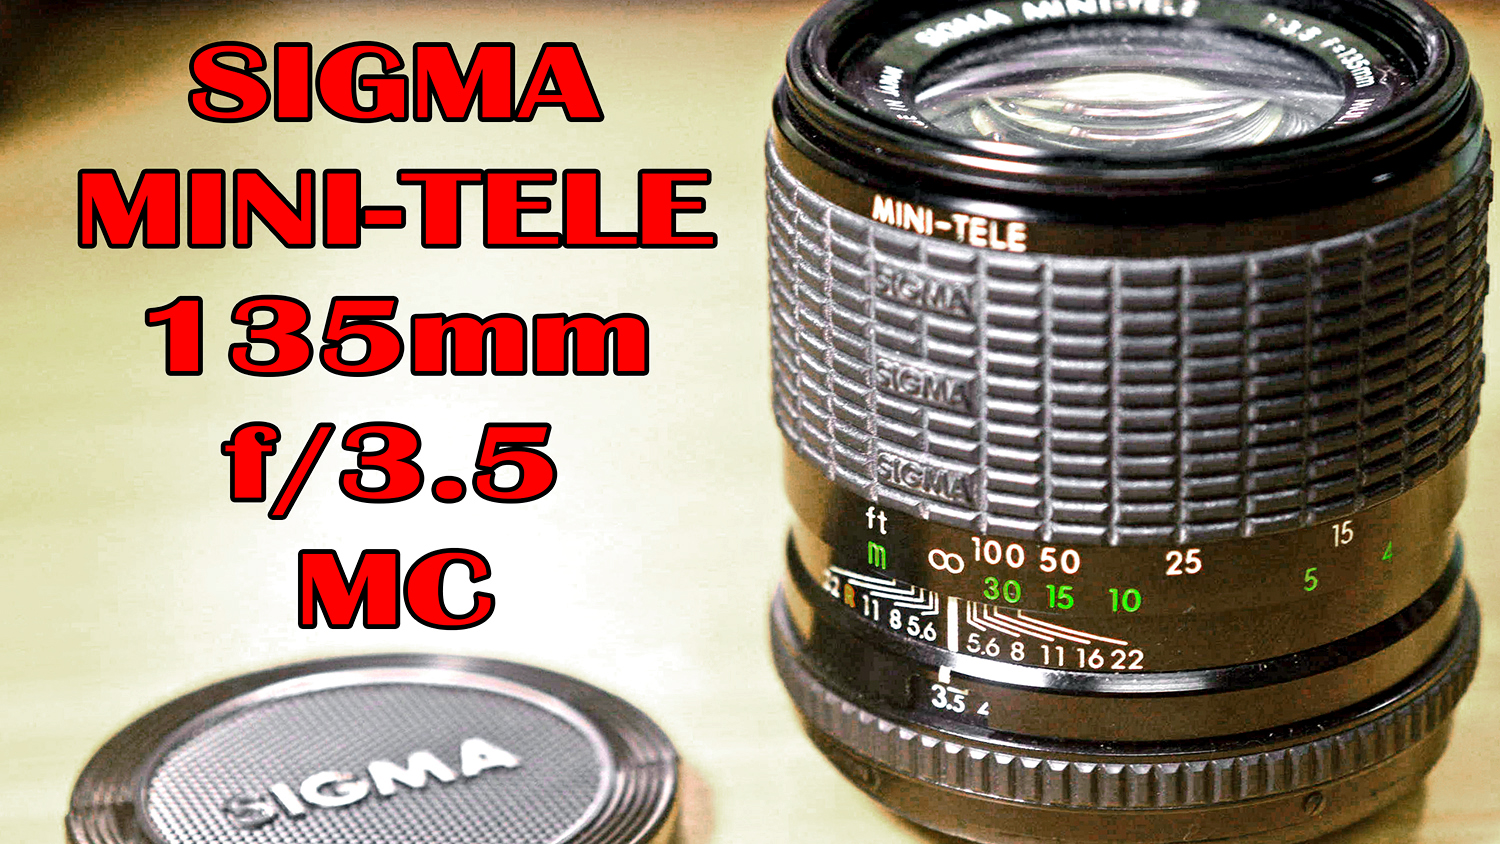 Sigma Mini-Tele 135mm f/3.5 MC (1981)